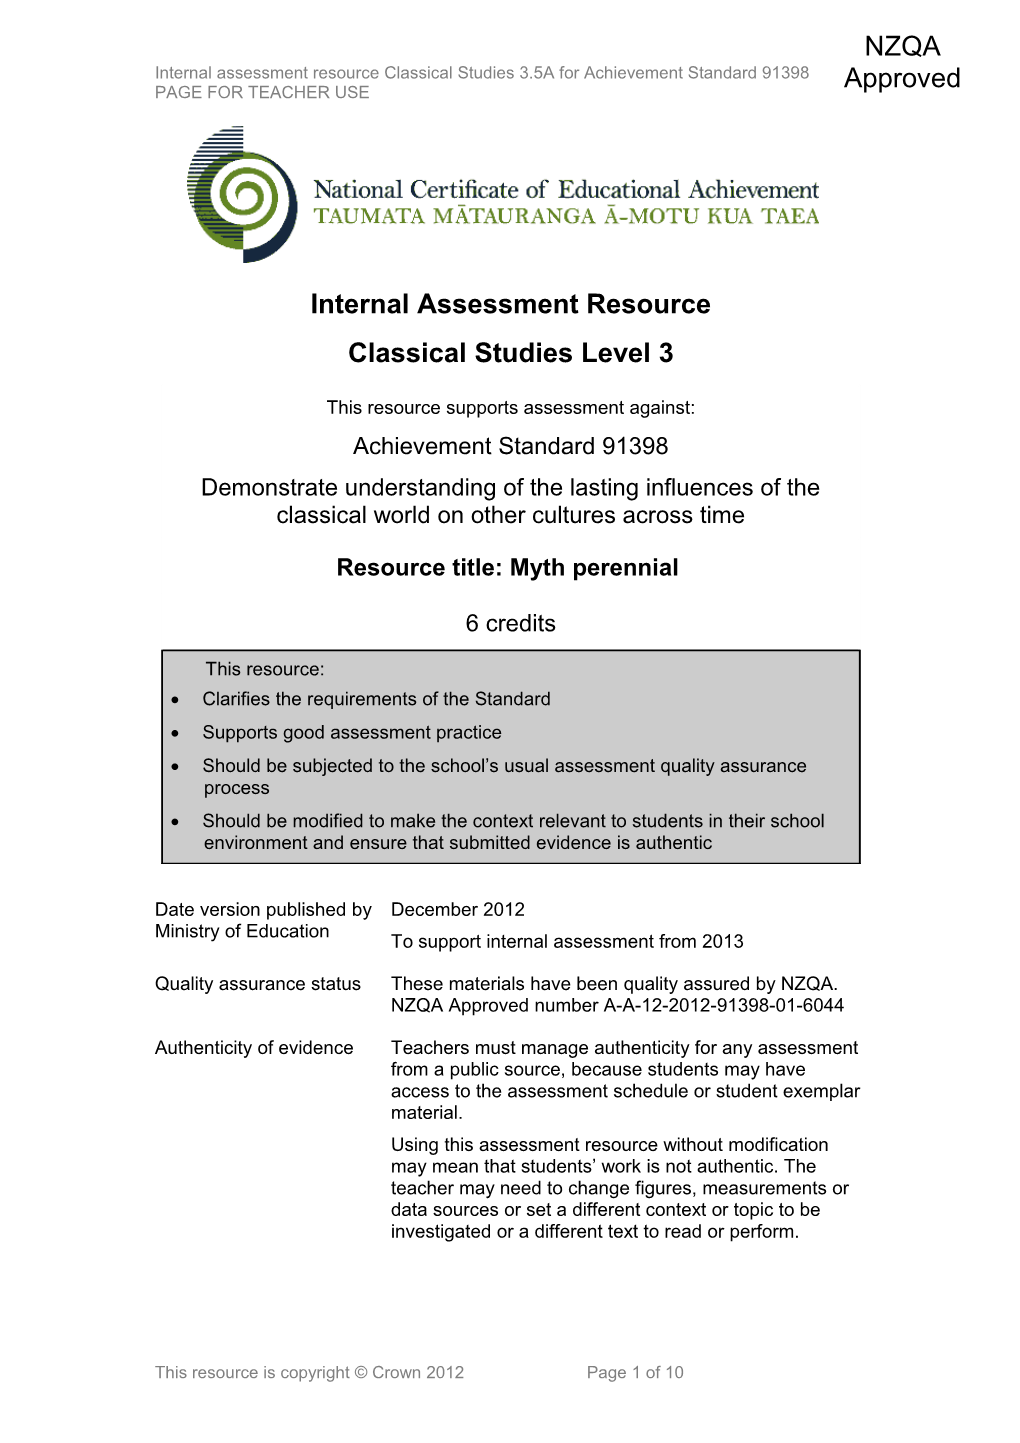 Level 3 Classical Studies Internal Assessment Resource